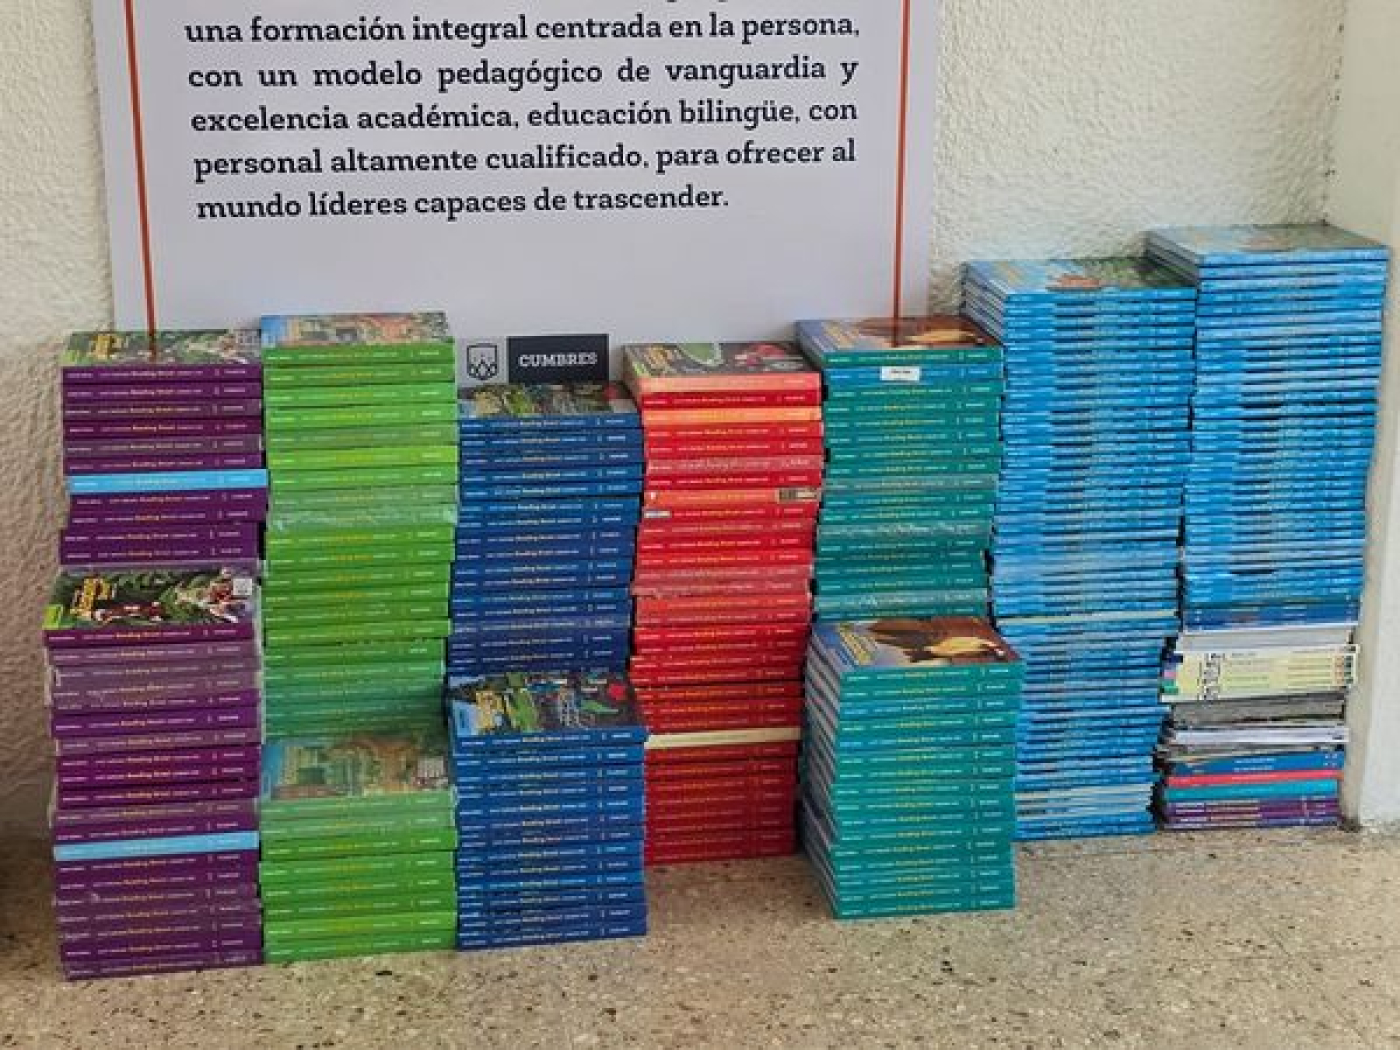 Recibe DIF importante donación de libros educativos en lengua inglés